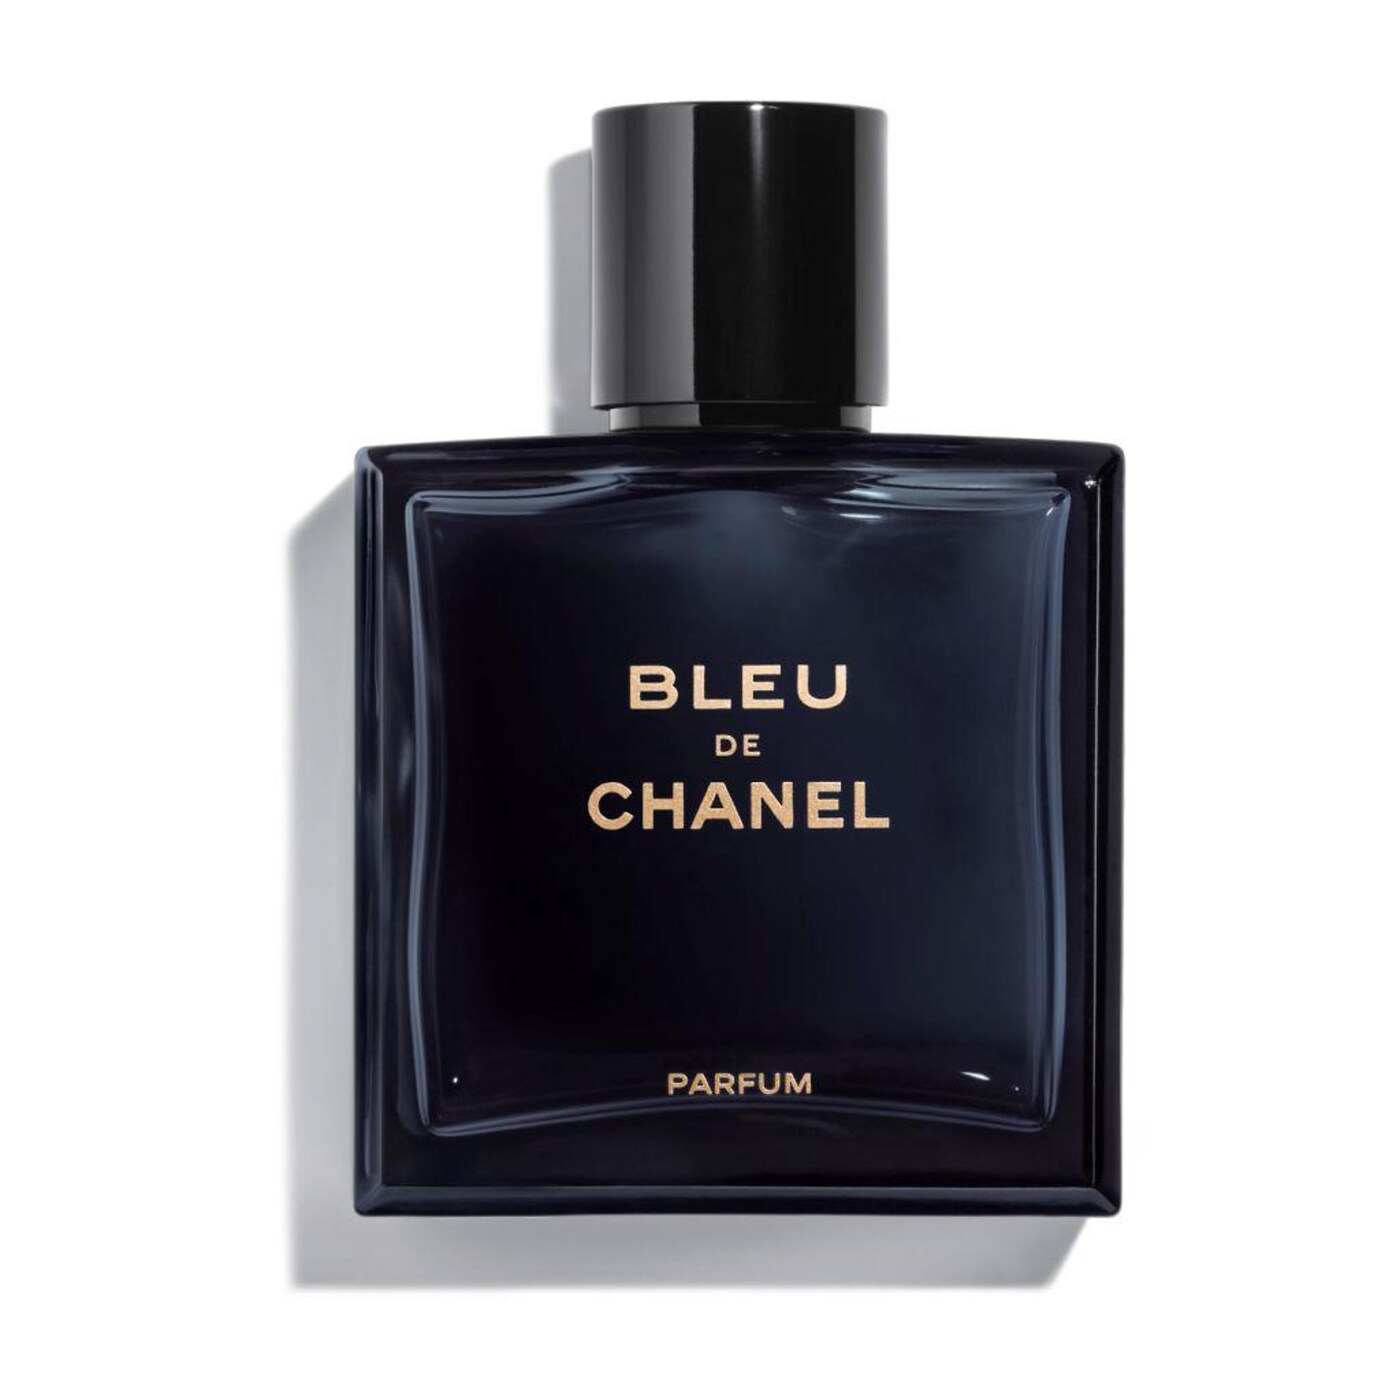 CHANEL BLEU DE CHANEL PARFUM  / 50mL Eau de Parfum Spray - SIRO  Cosmetic